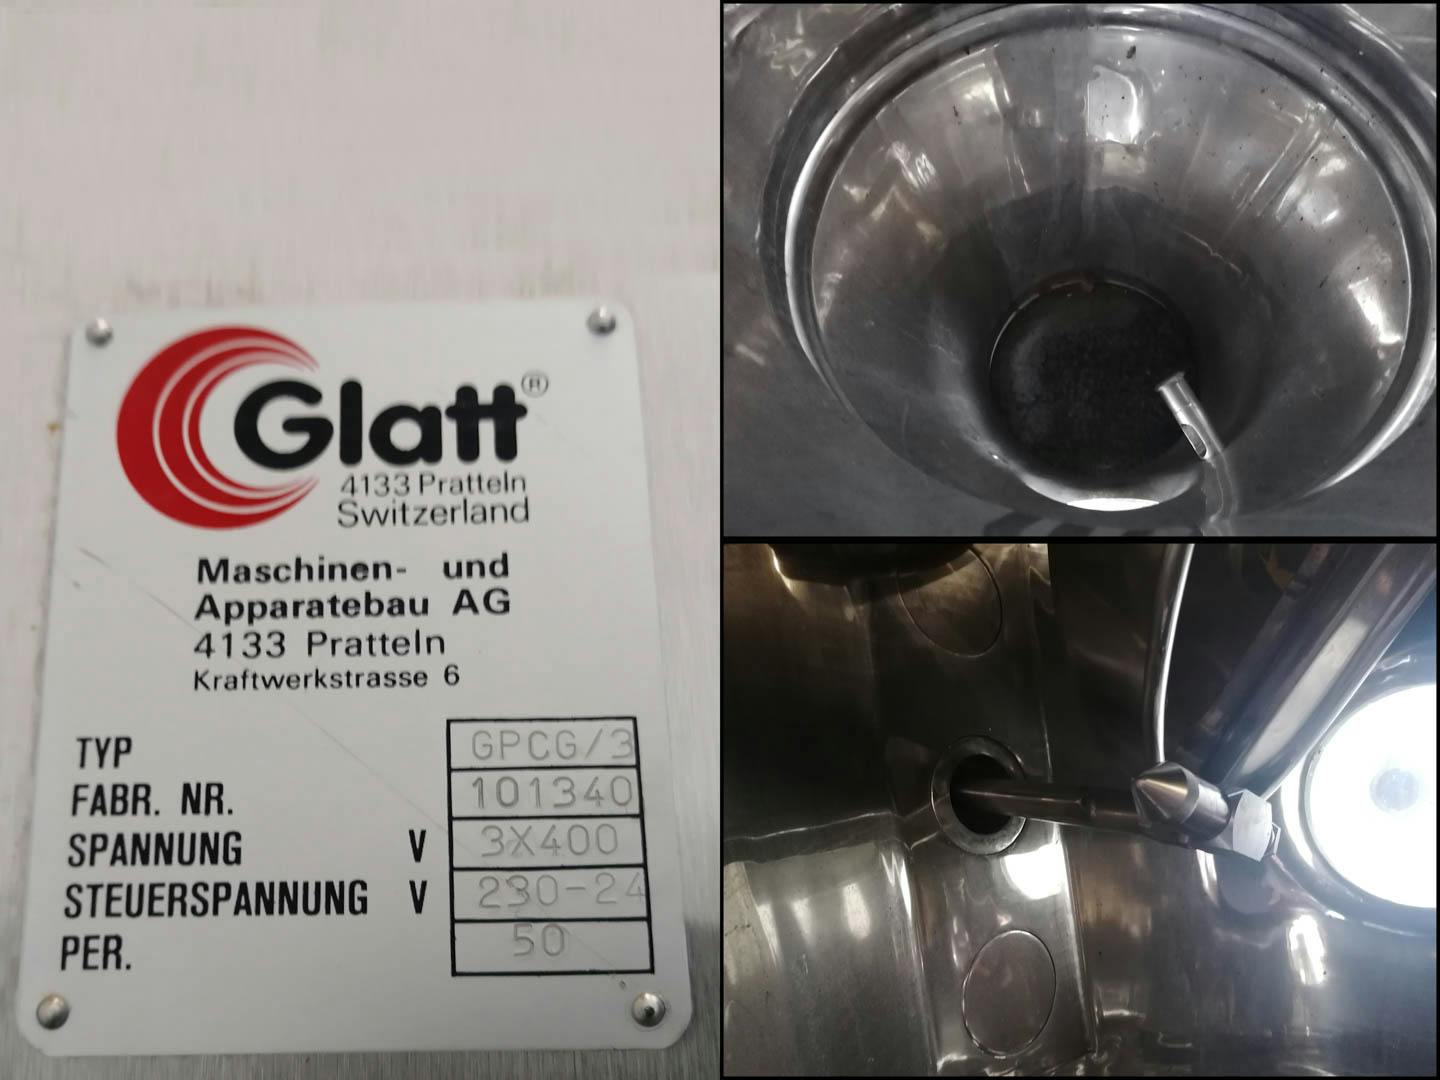 Glatt GPCG/3-15 - Fluidbeddroger batch - image 15